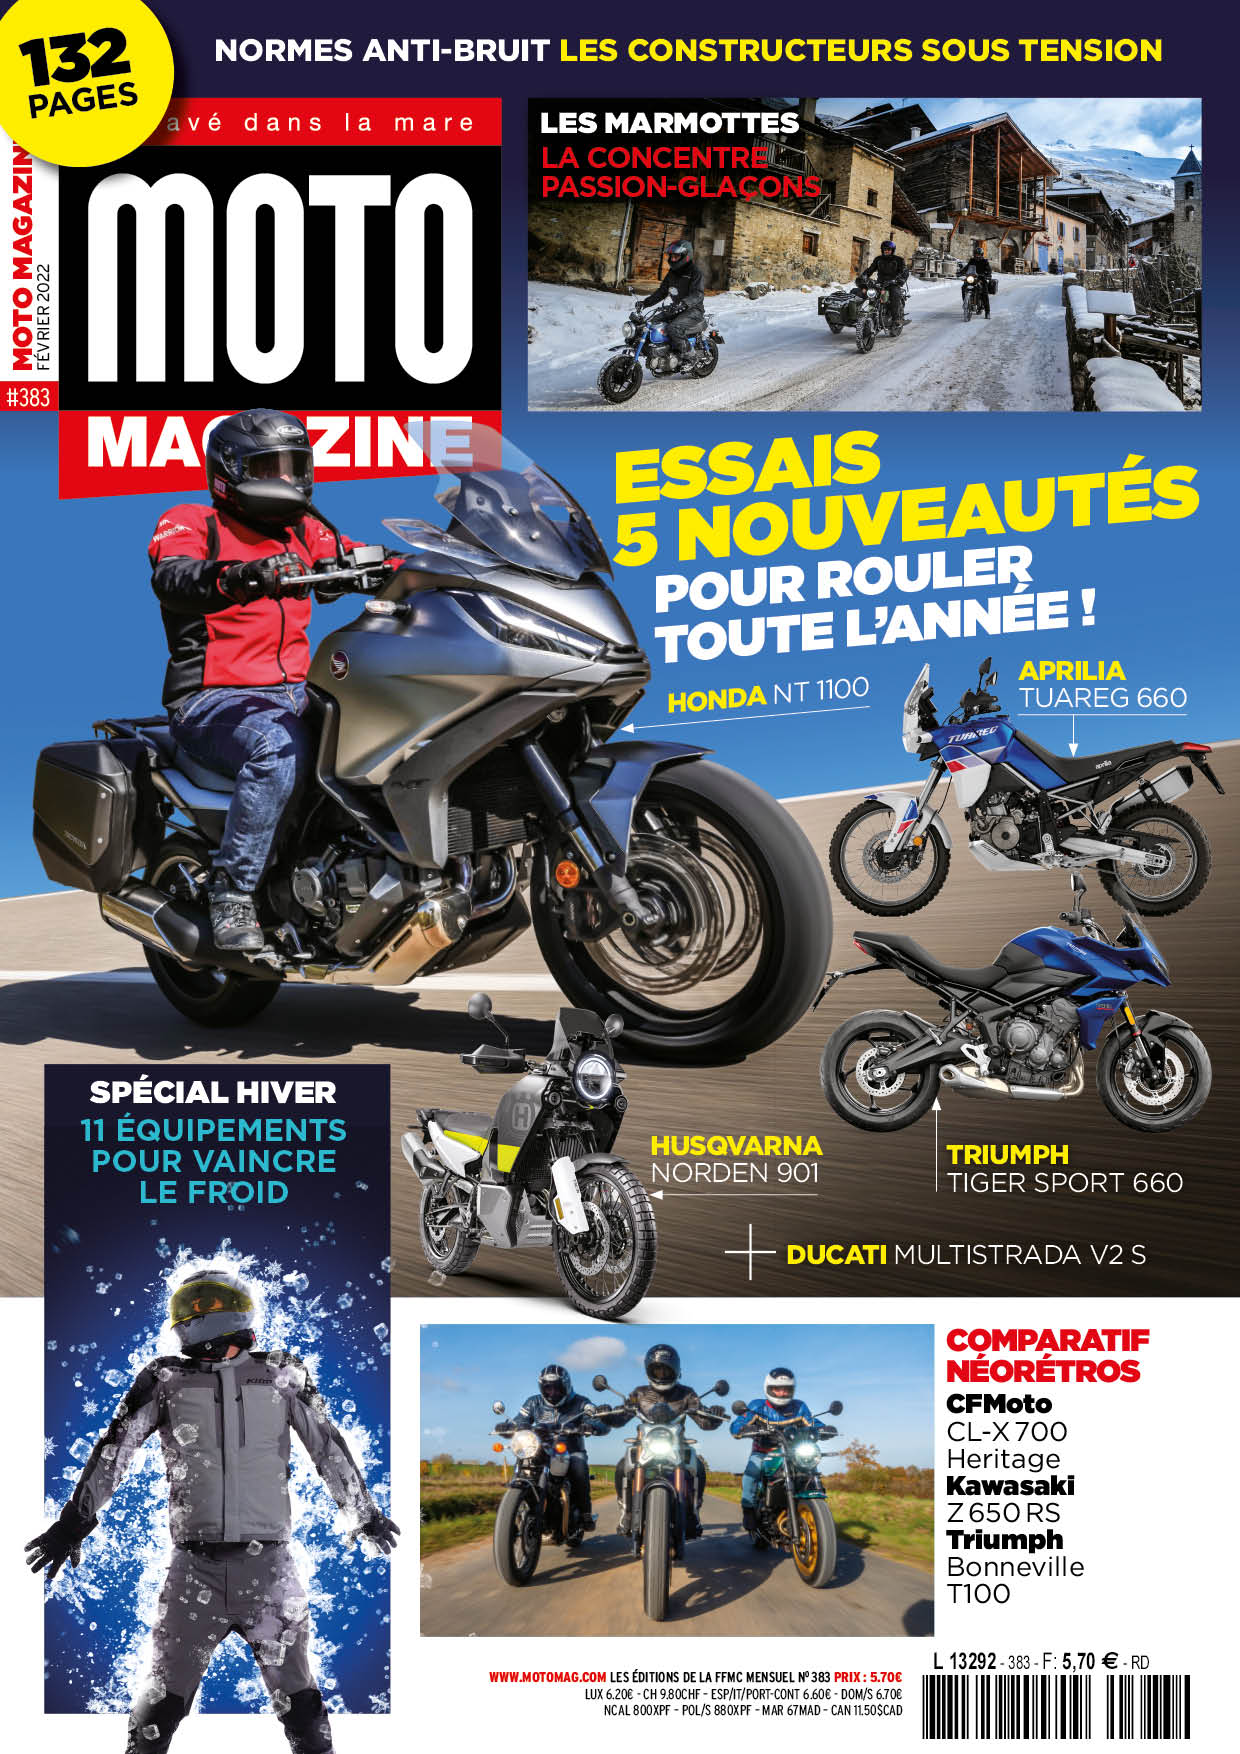 Moto Magazine n°383 est en kiosque !